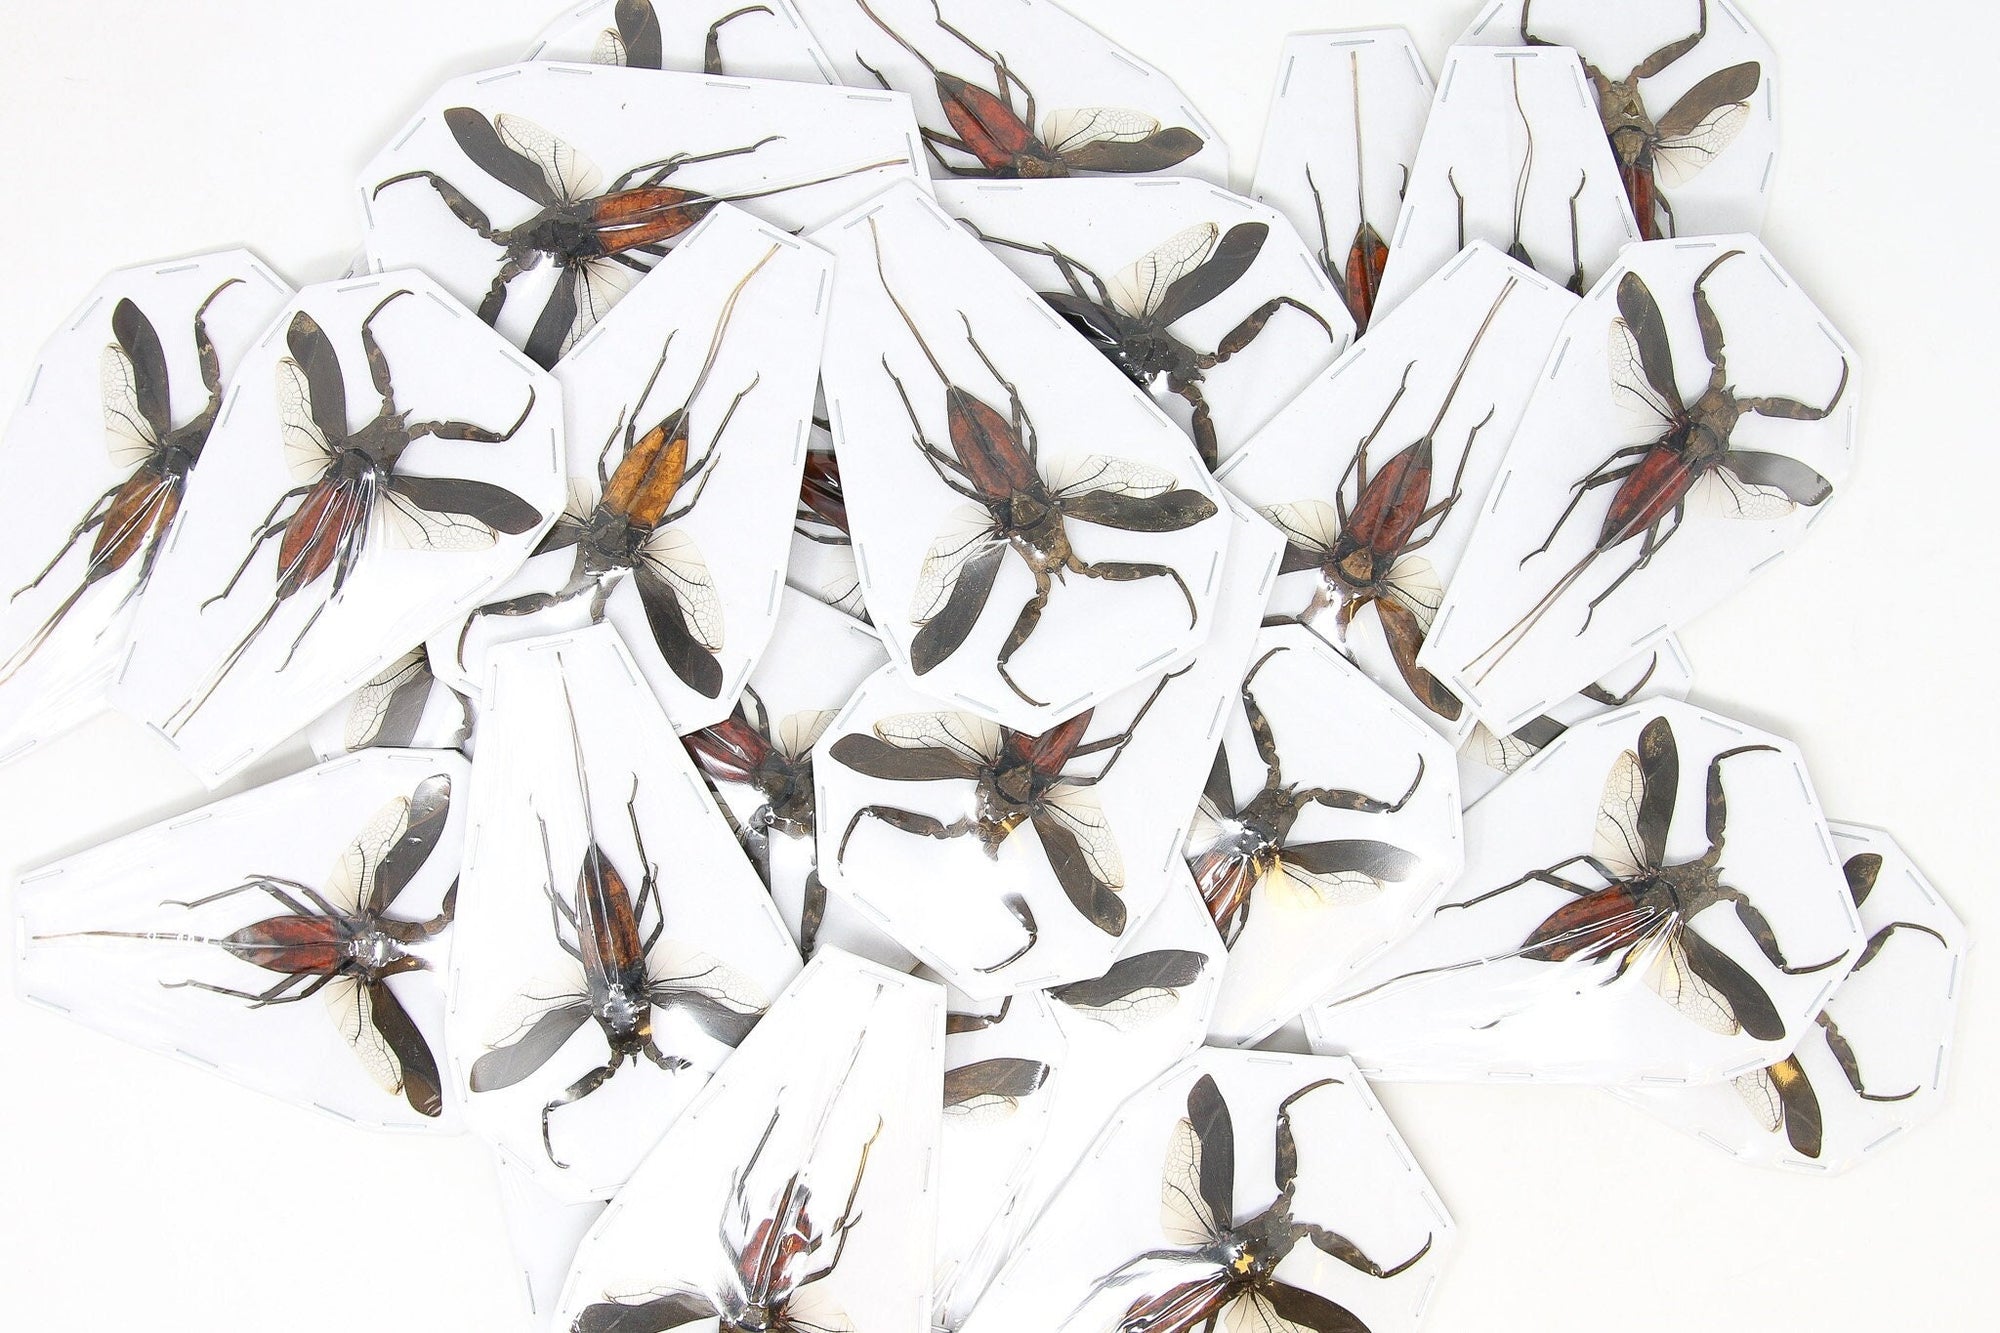 Lot of 10 Java Water Scorpions (Nepa rubra) A1 Real Dry-Preserved Hemiptera Specimens